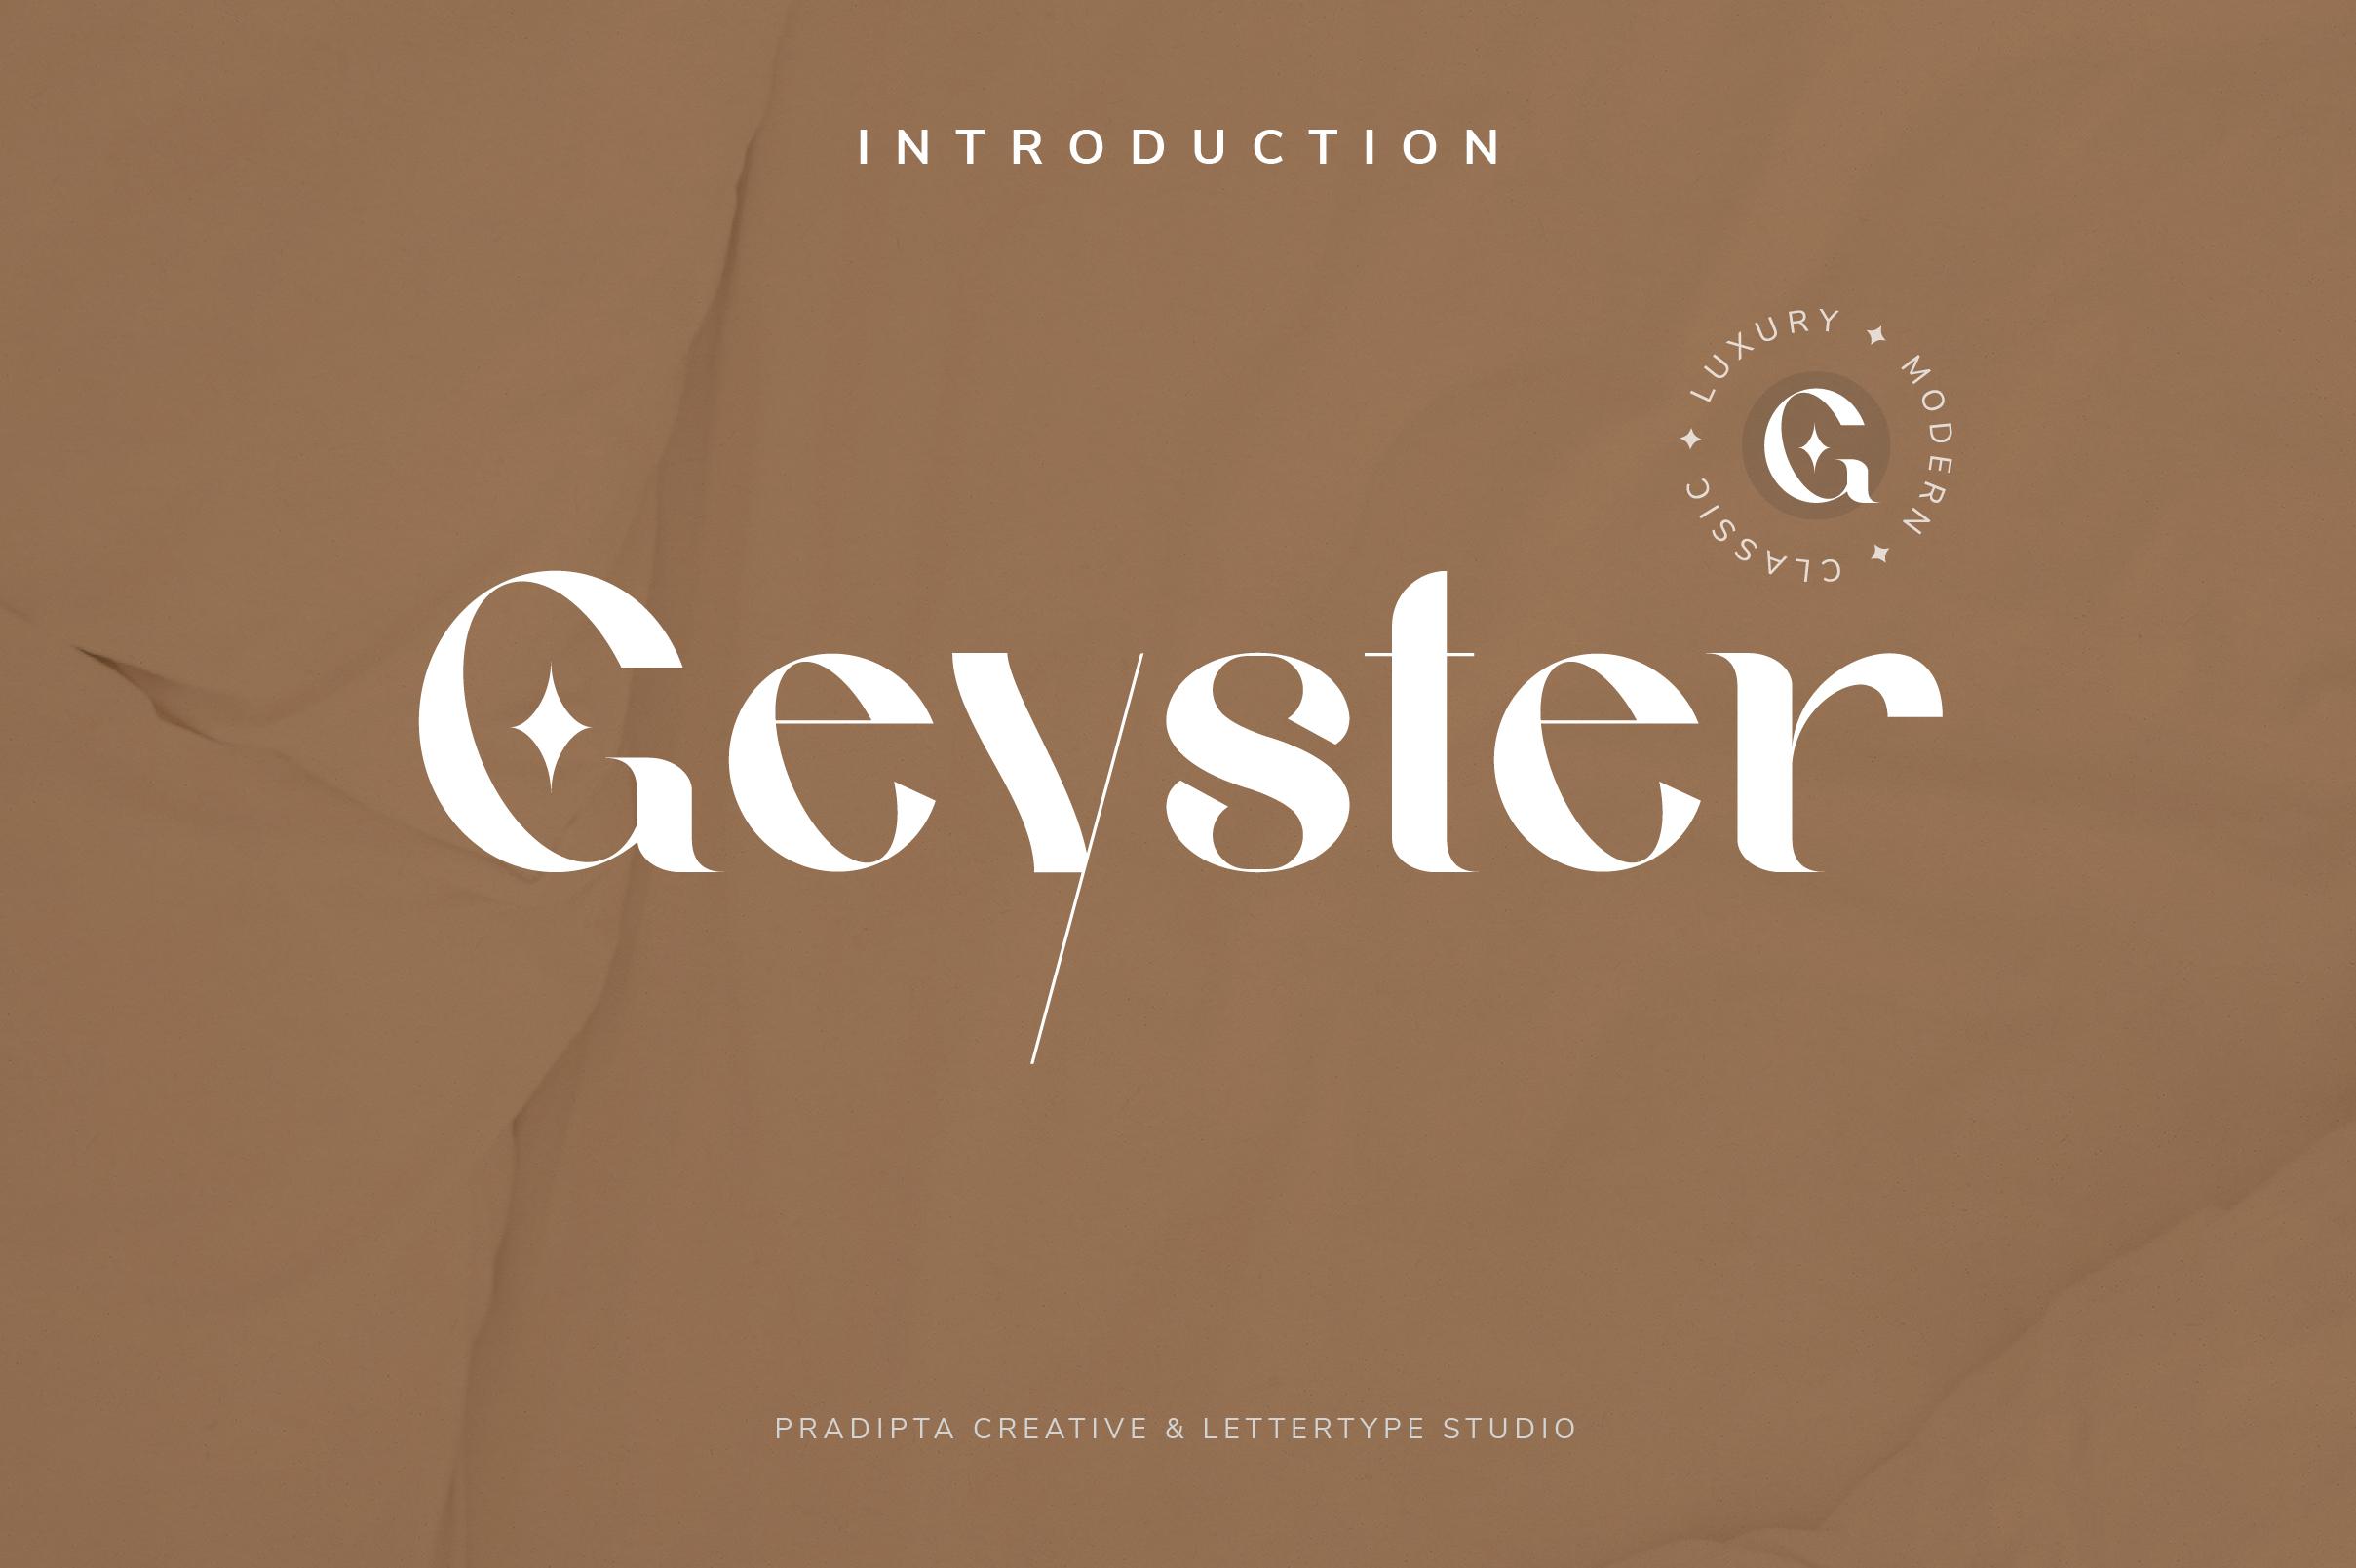 Geyster Font